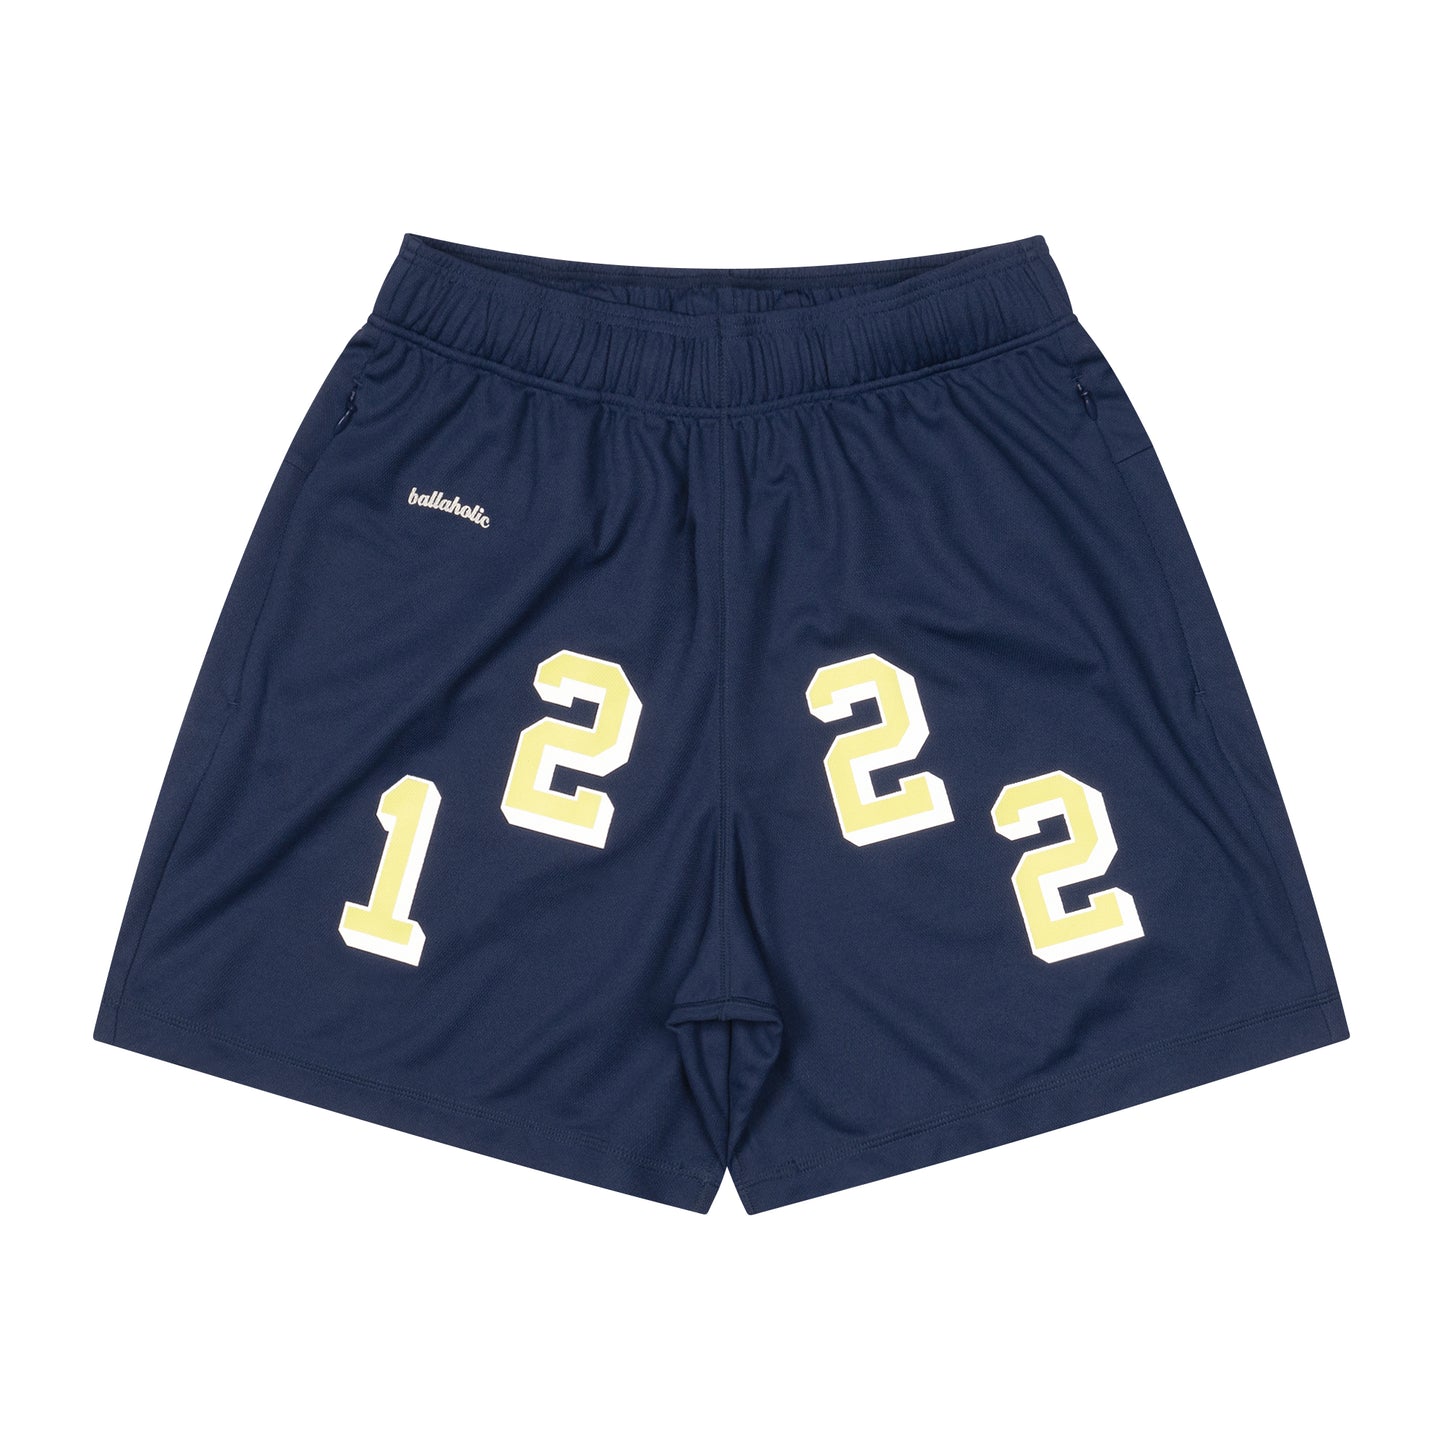 10th Zip Shorts (navy)